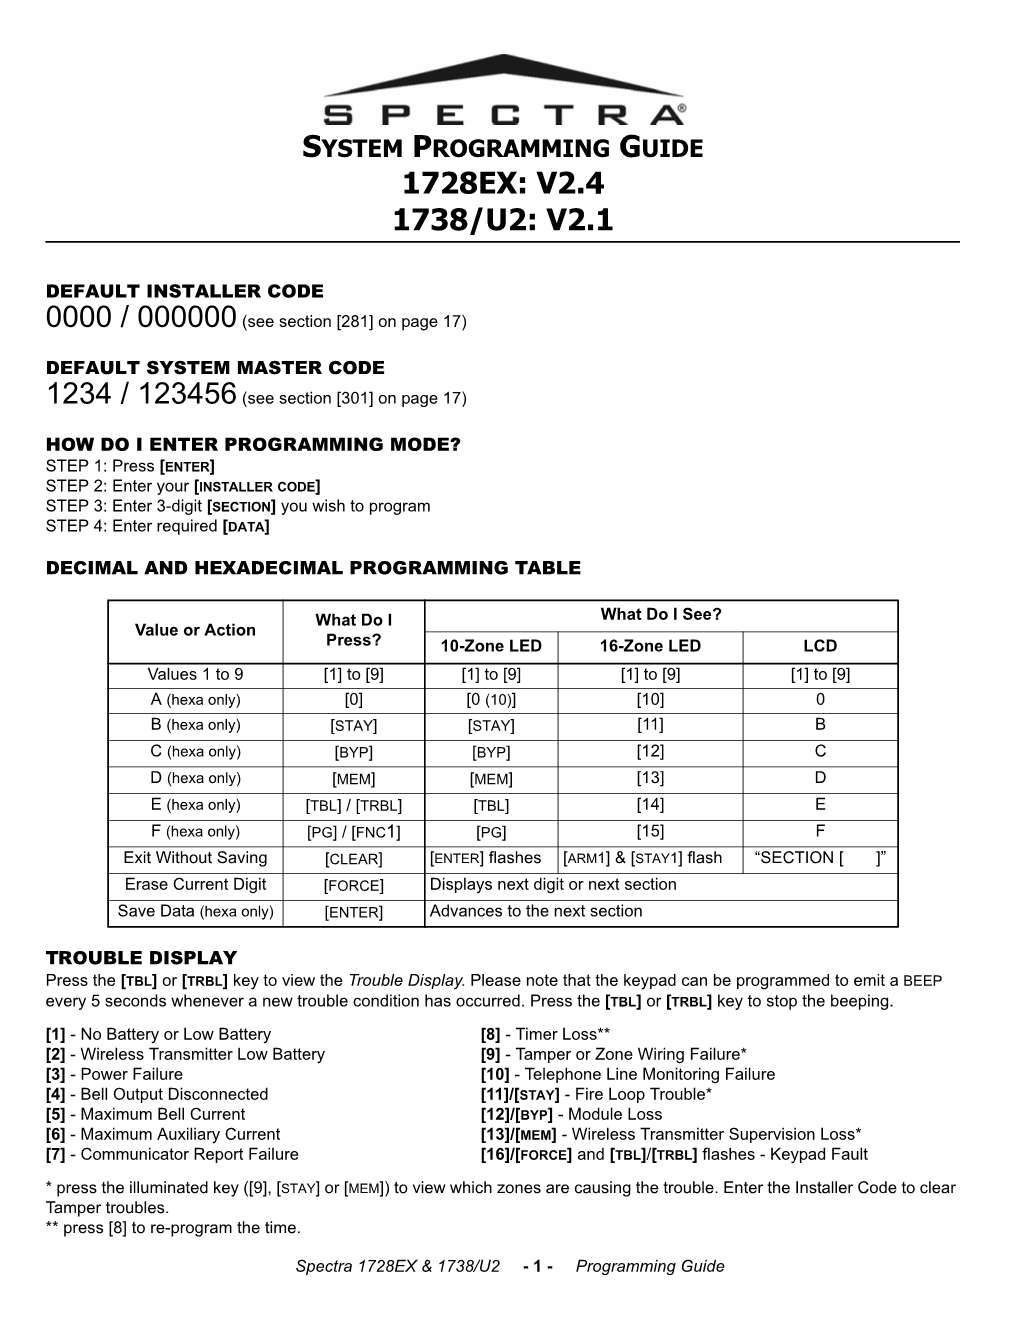 System Programming Guide 1728Ex: V2.4 1738/U2: V2.1